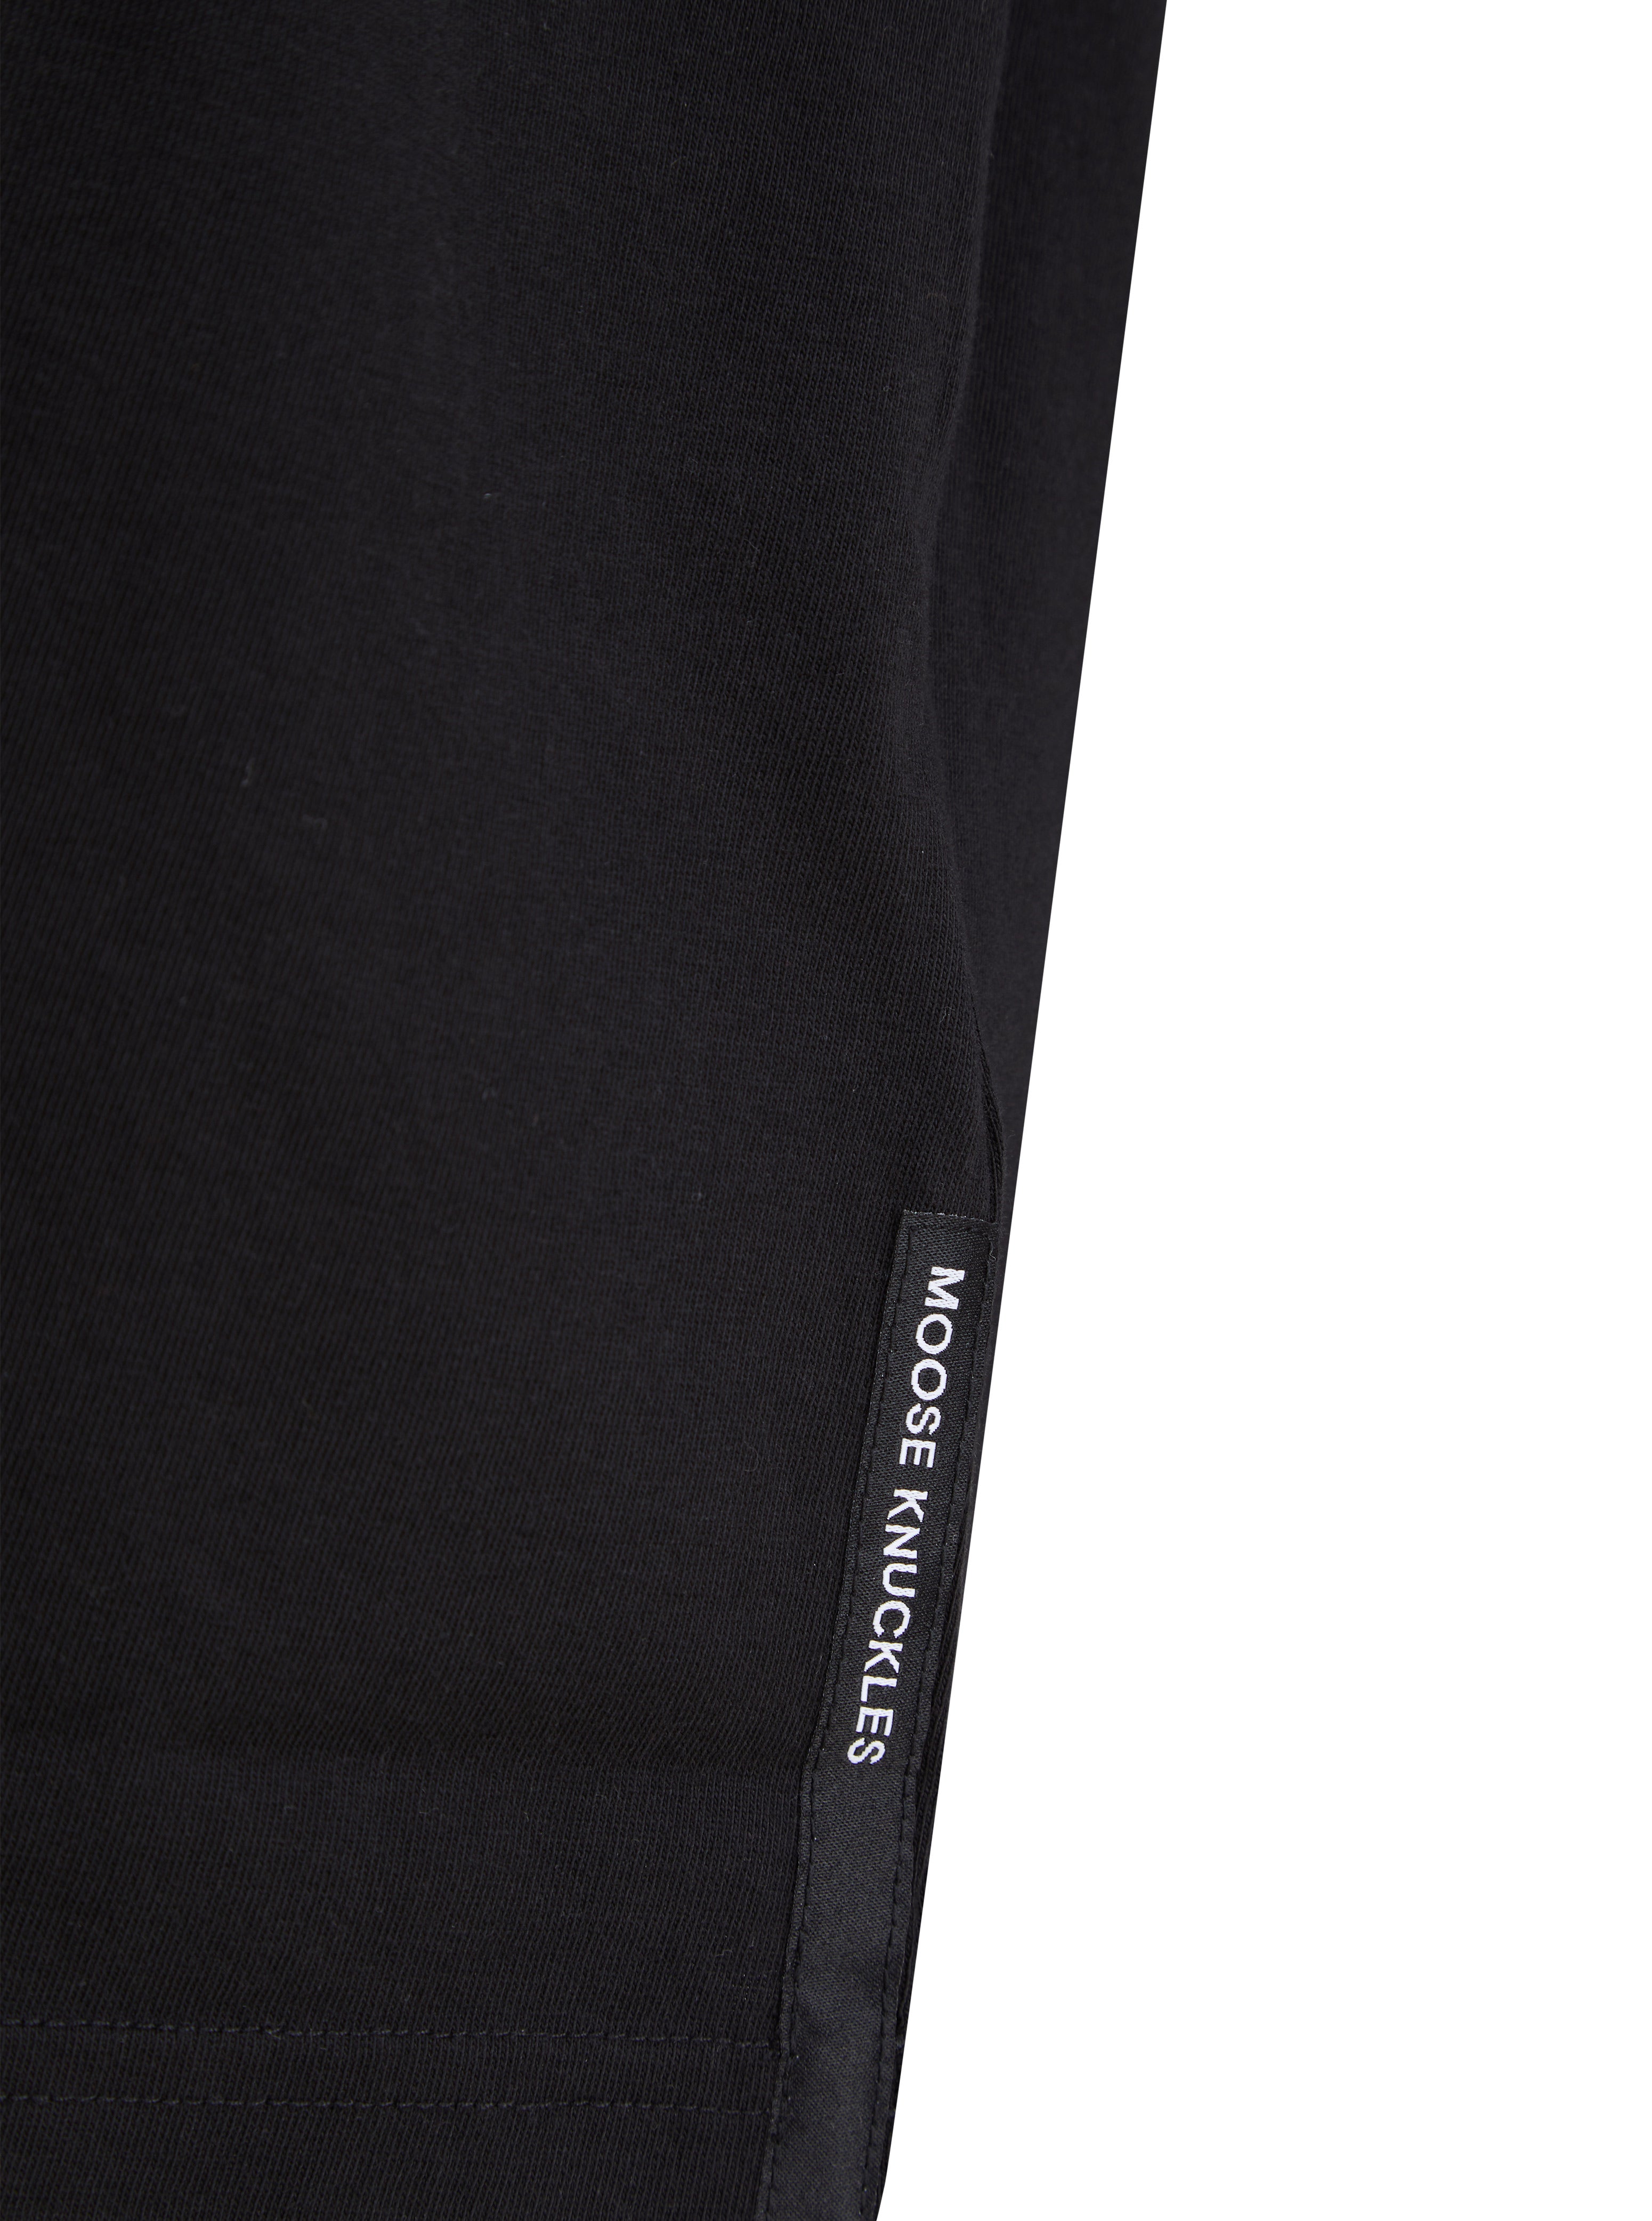 Load image into Gallery viewer, Moose Knuckles Logo Tee Black
